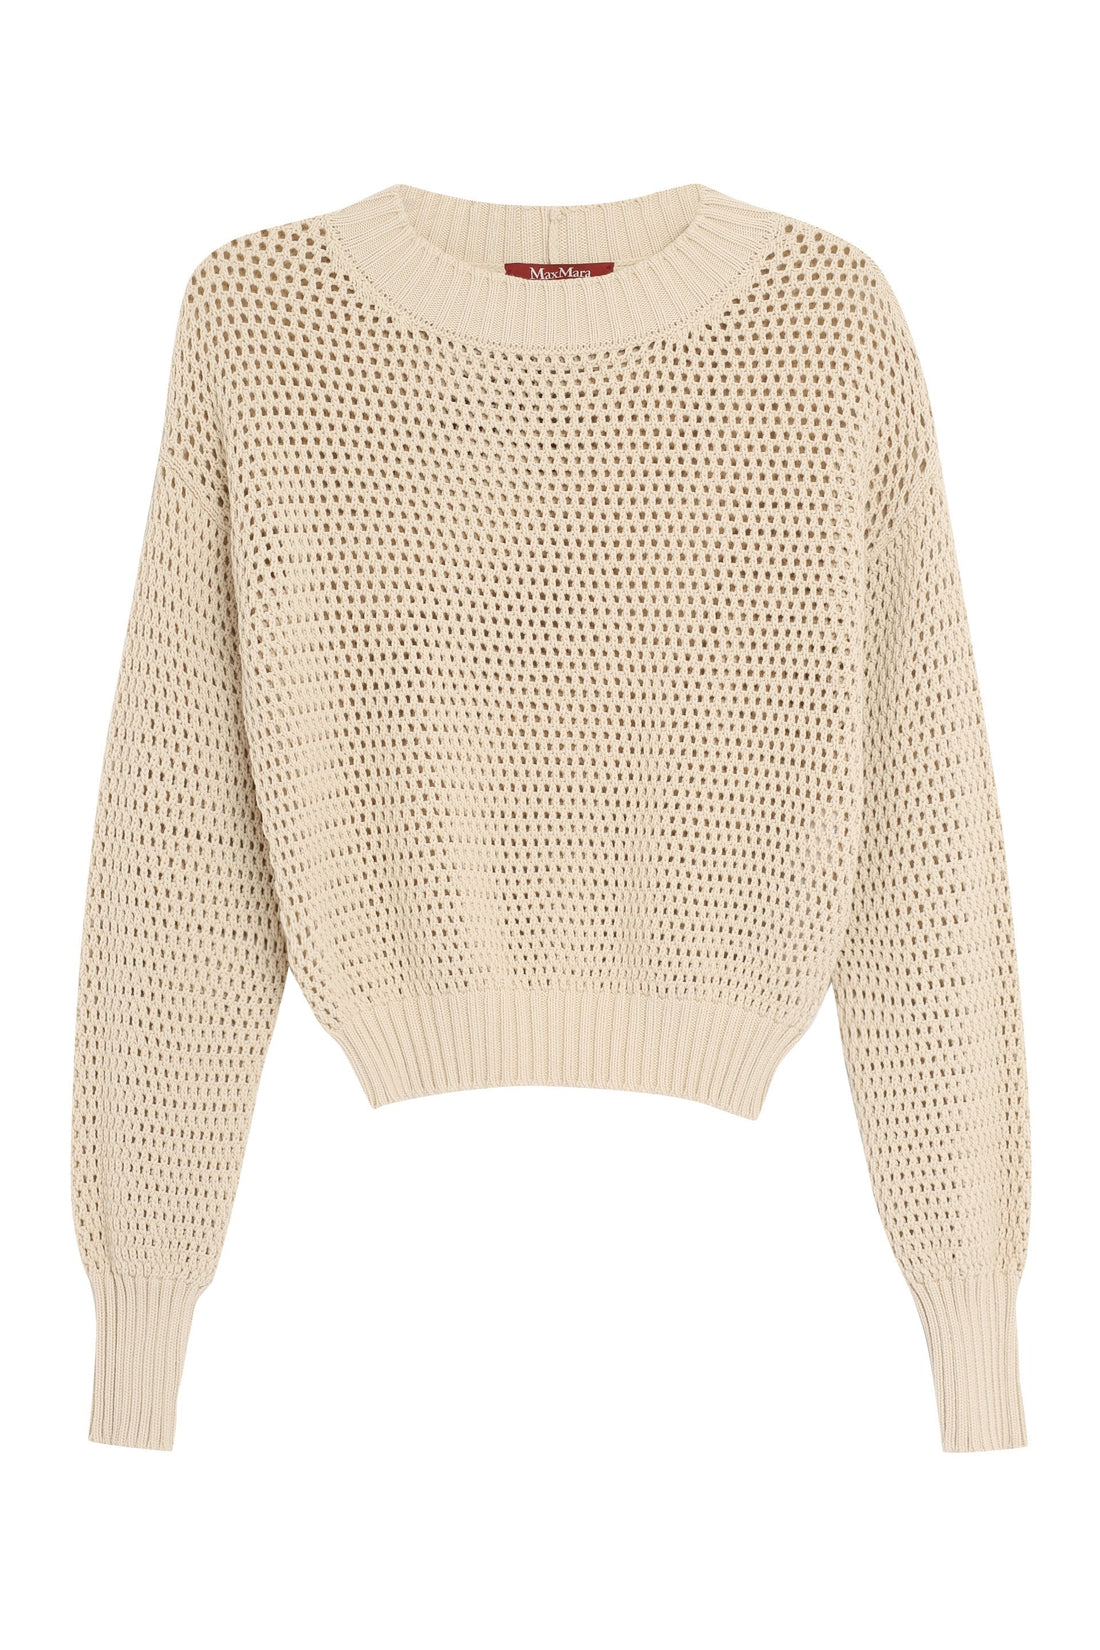 Max Mara Studio-OUTLET-SALE-Matassa cotton sweater-ARCHIVIST